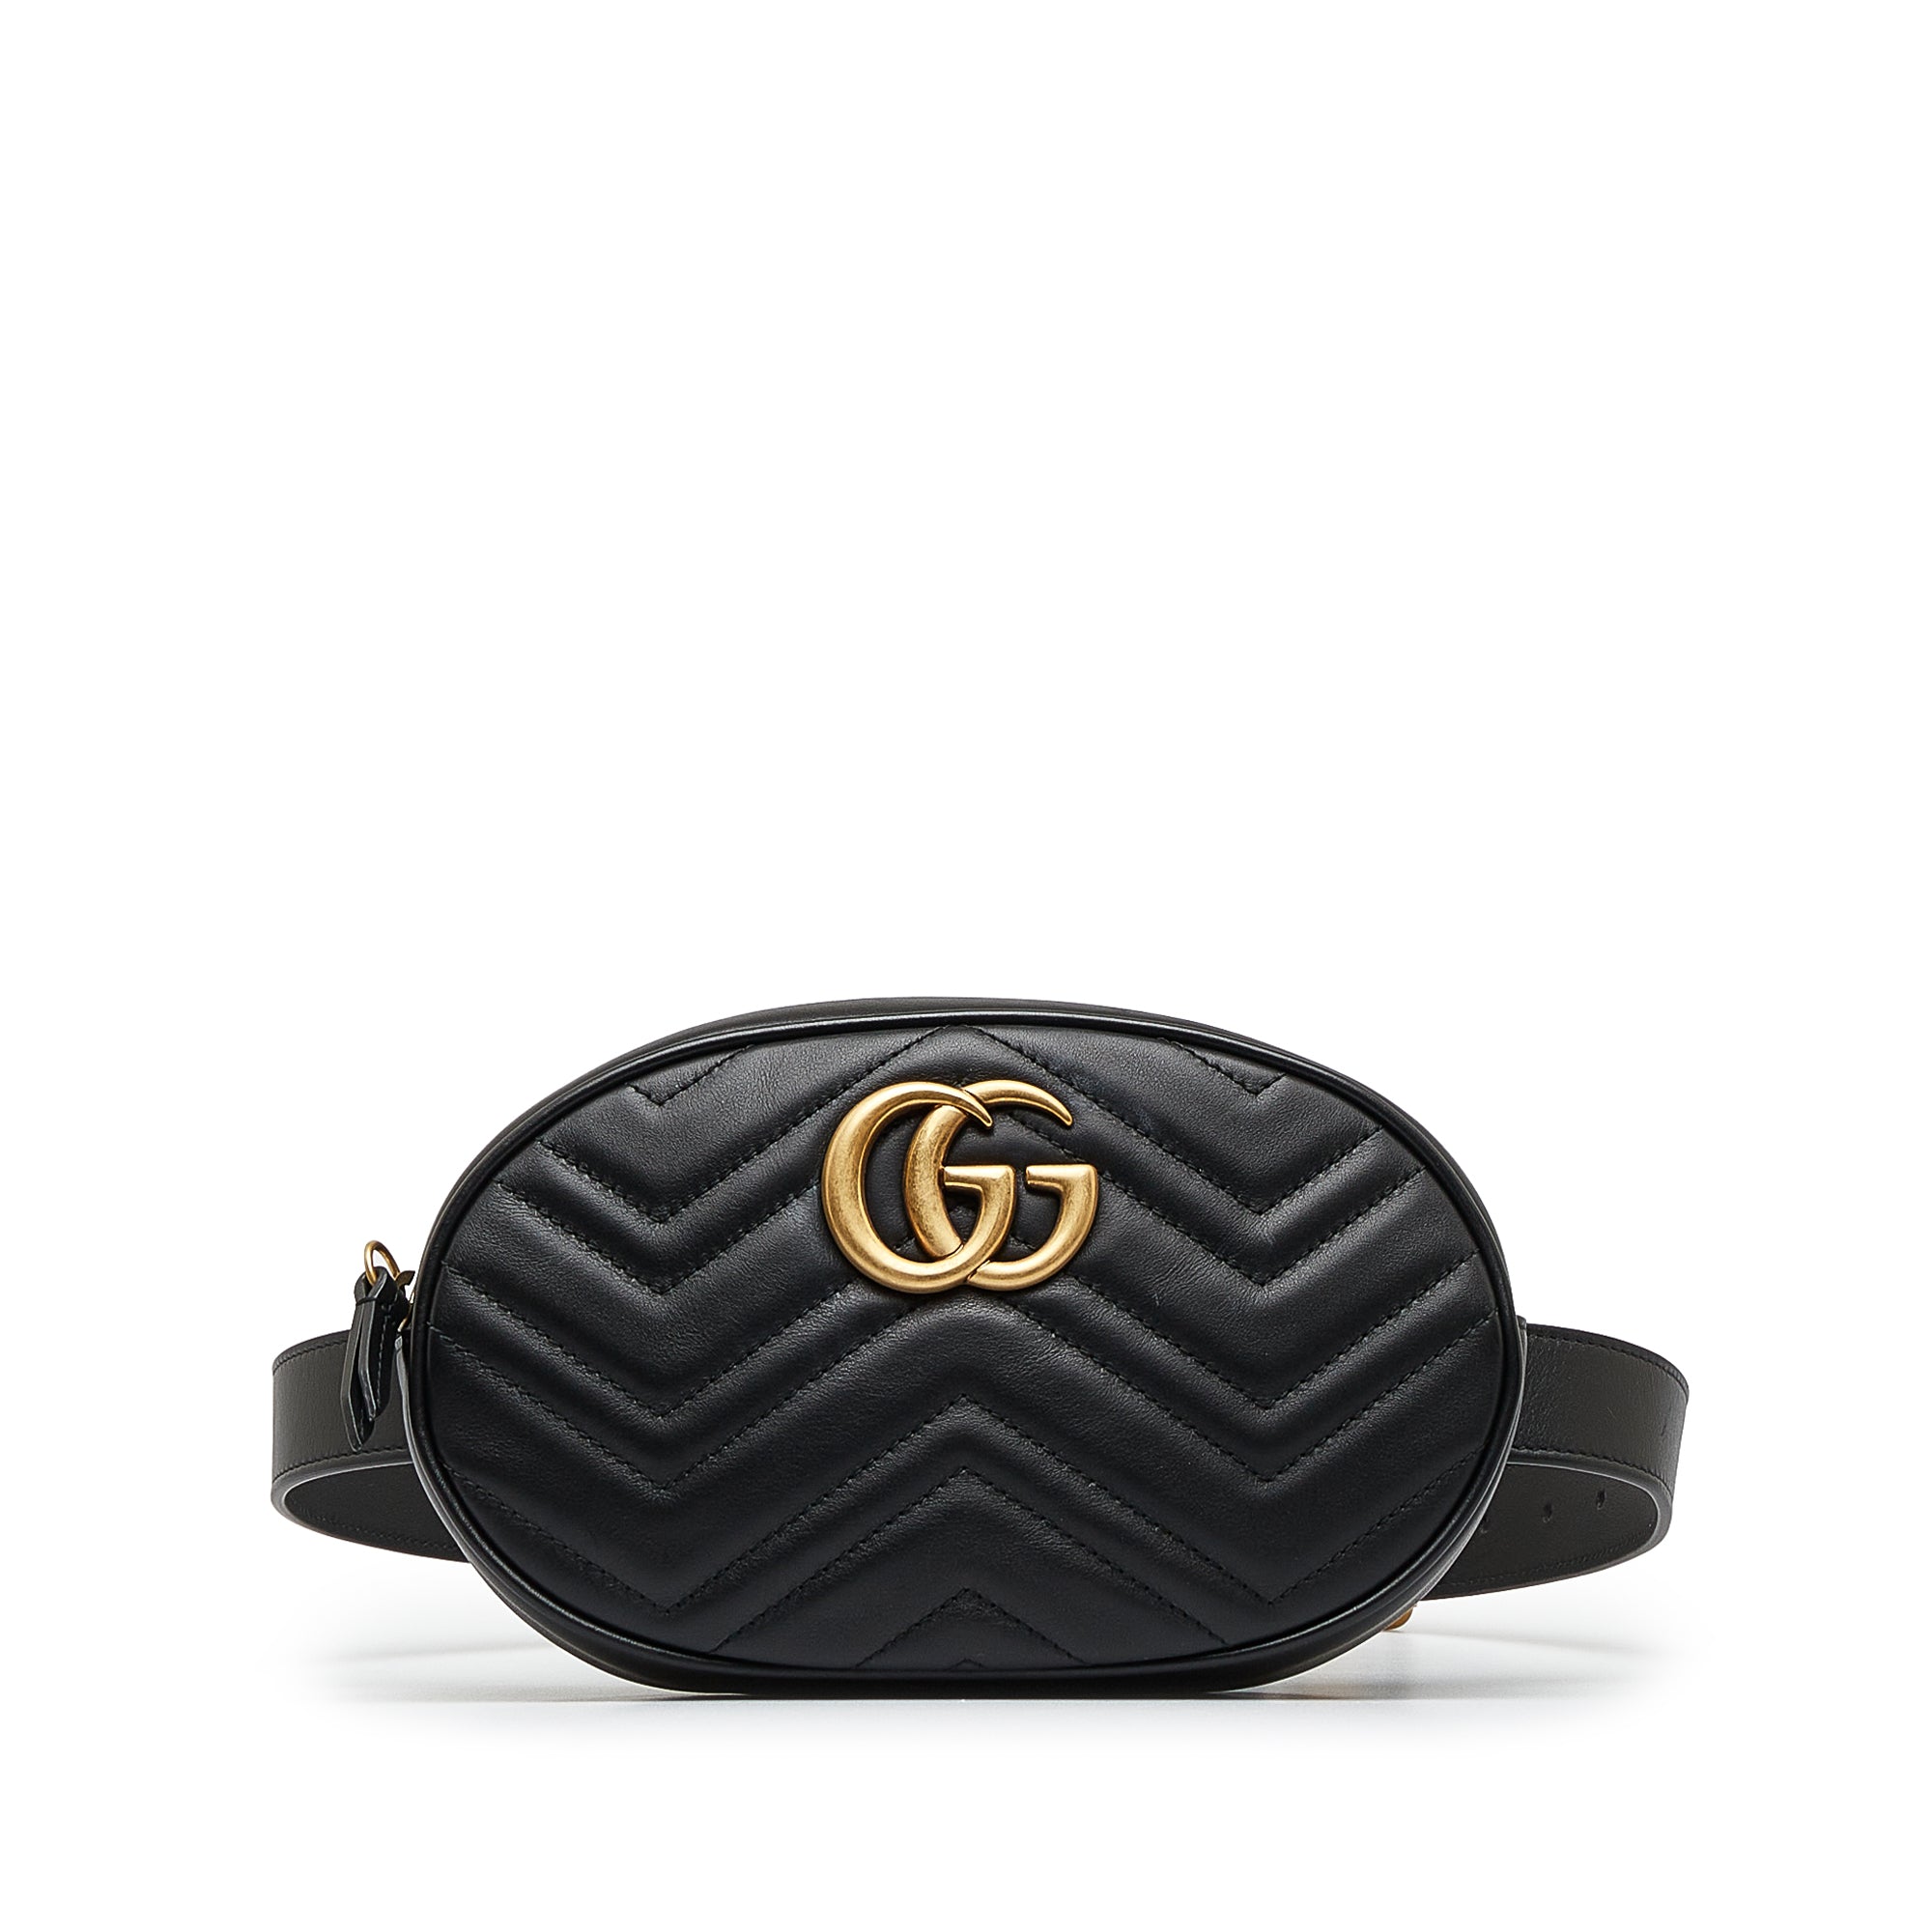 GG Marmont belt bag in black leather